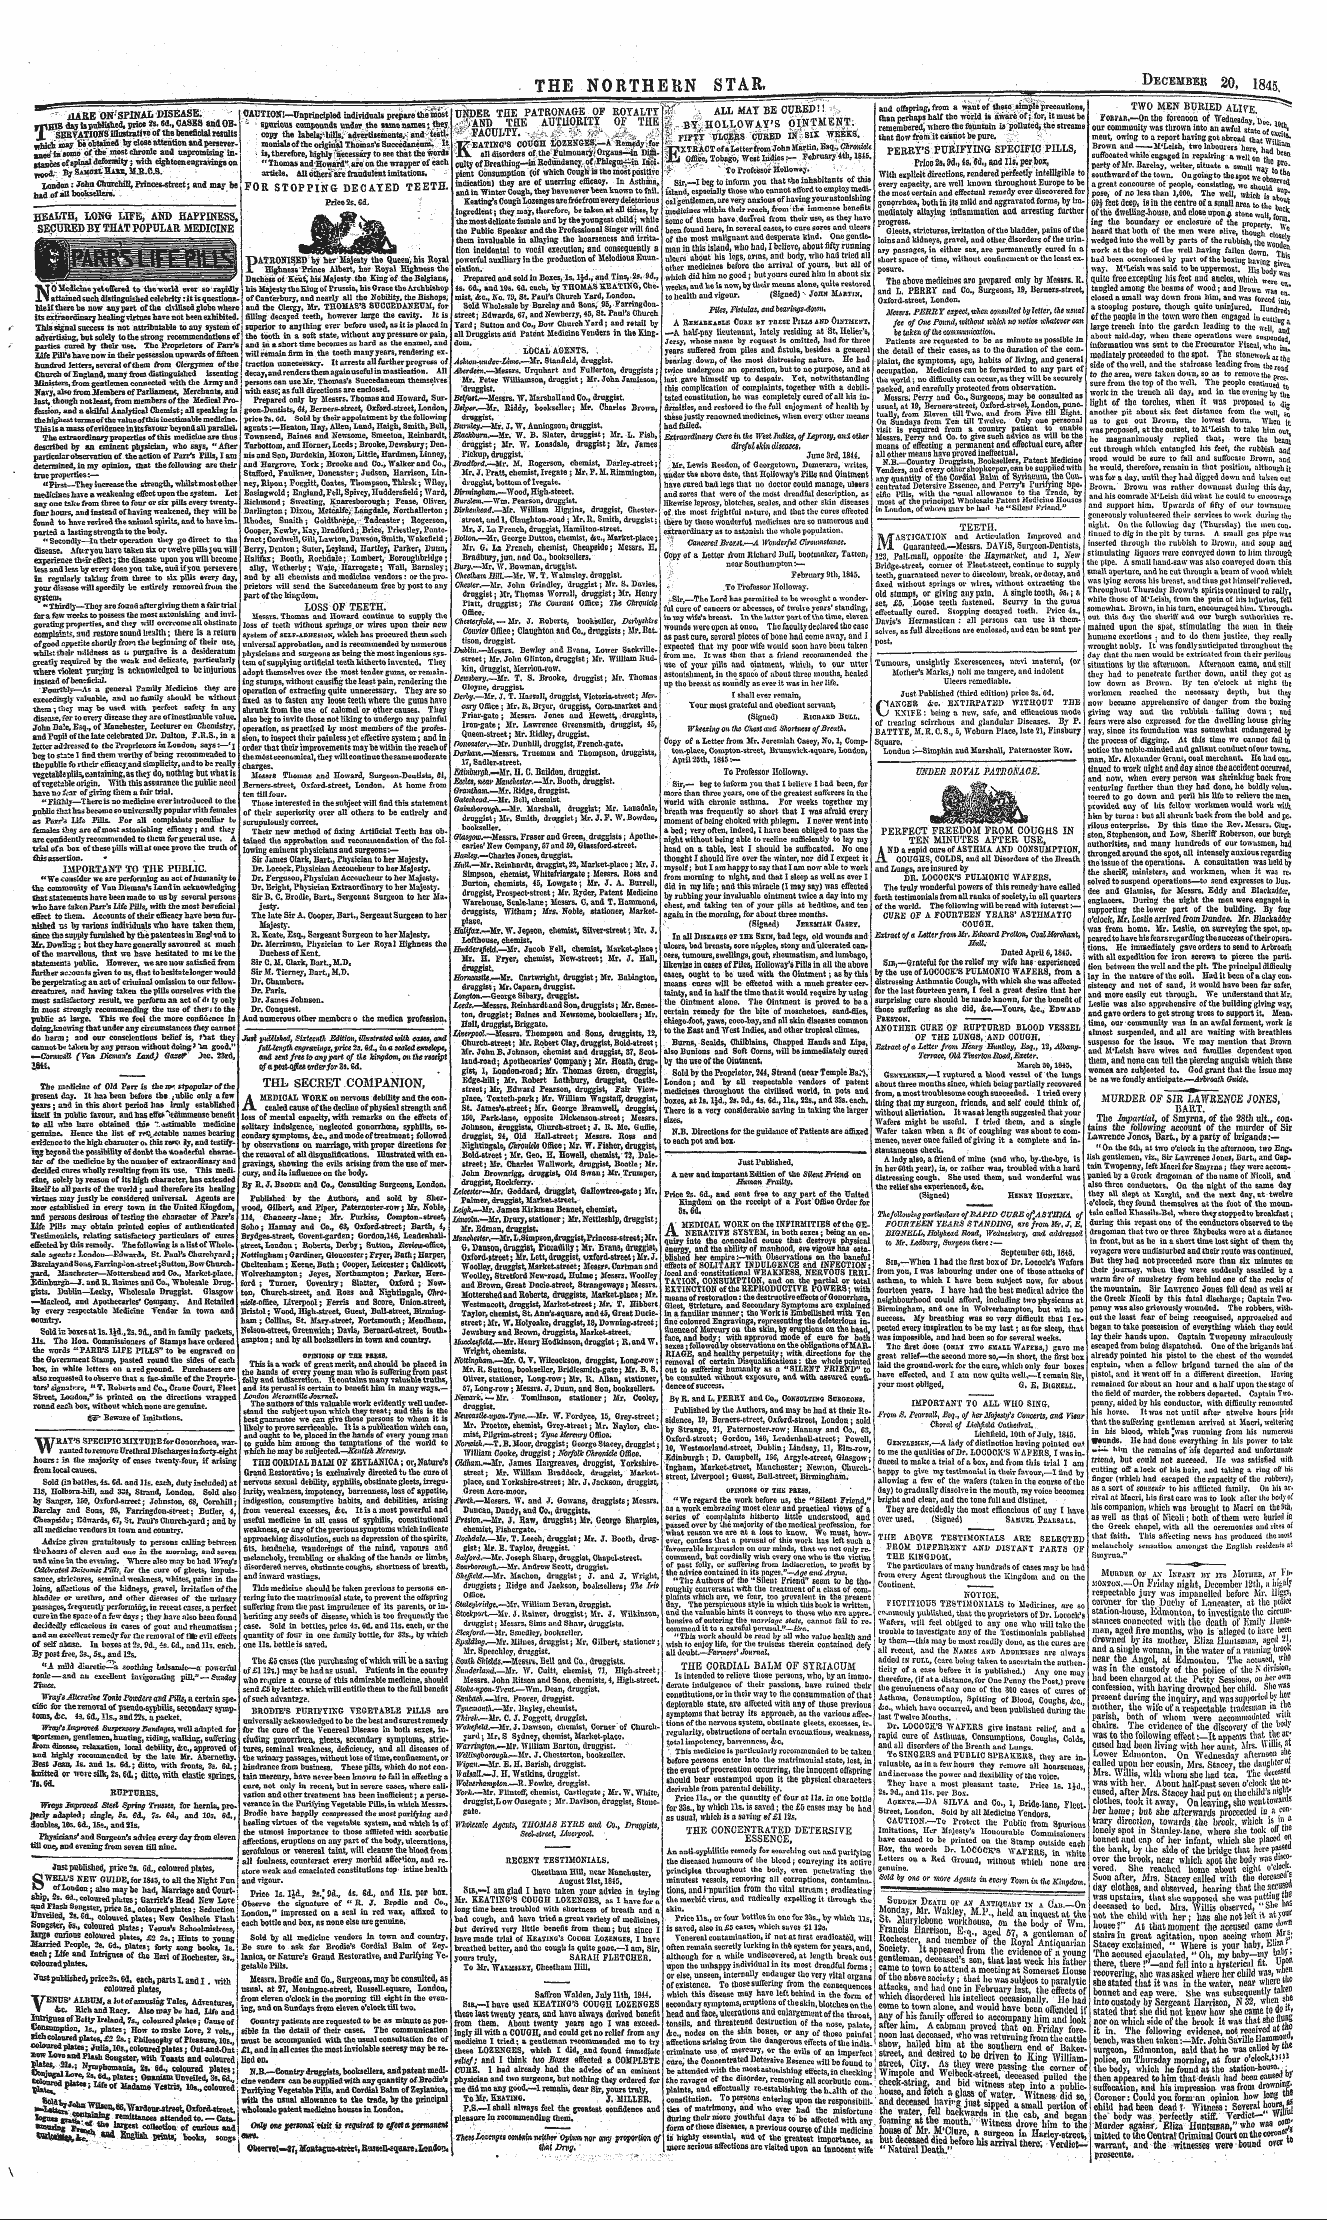 Northern Star (1837-1852): jS F Y, 4th edition - Ad00218